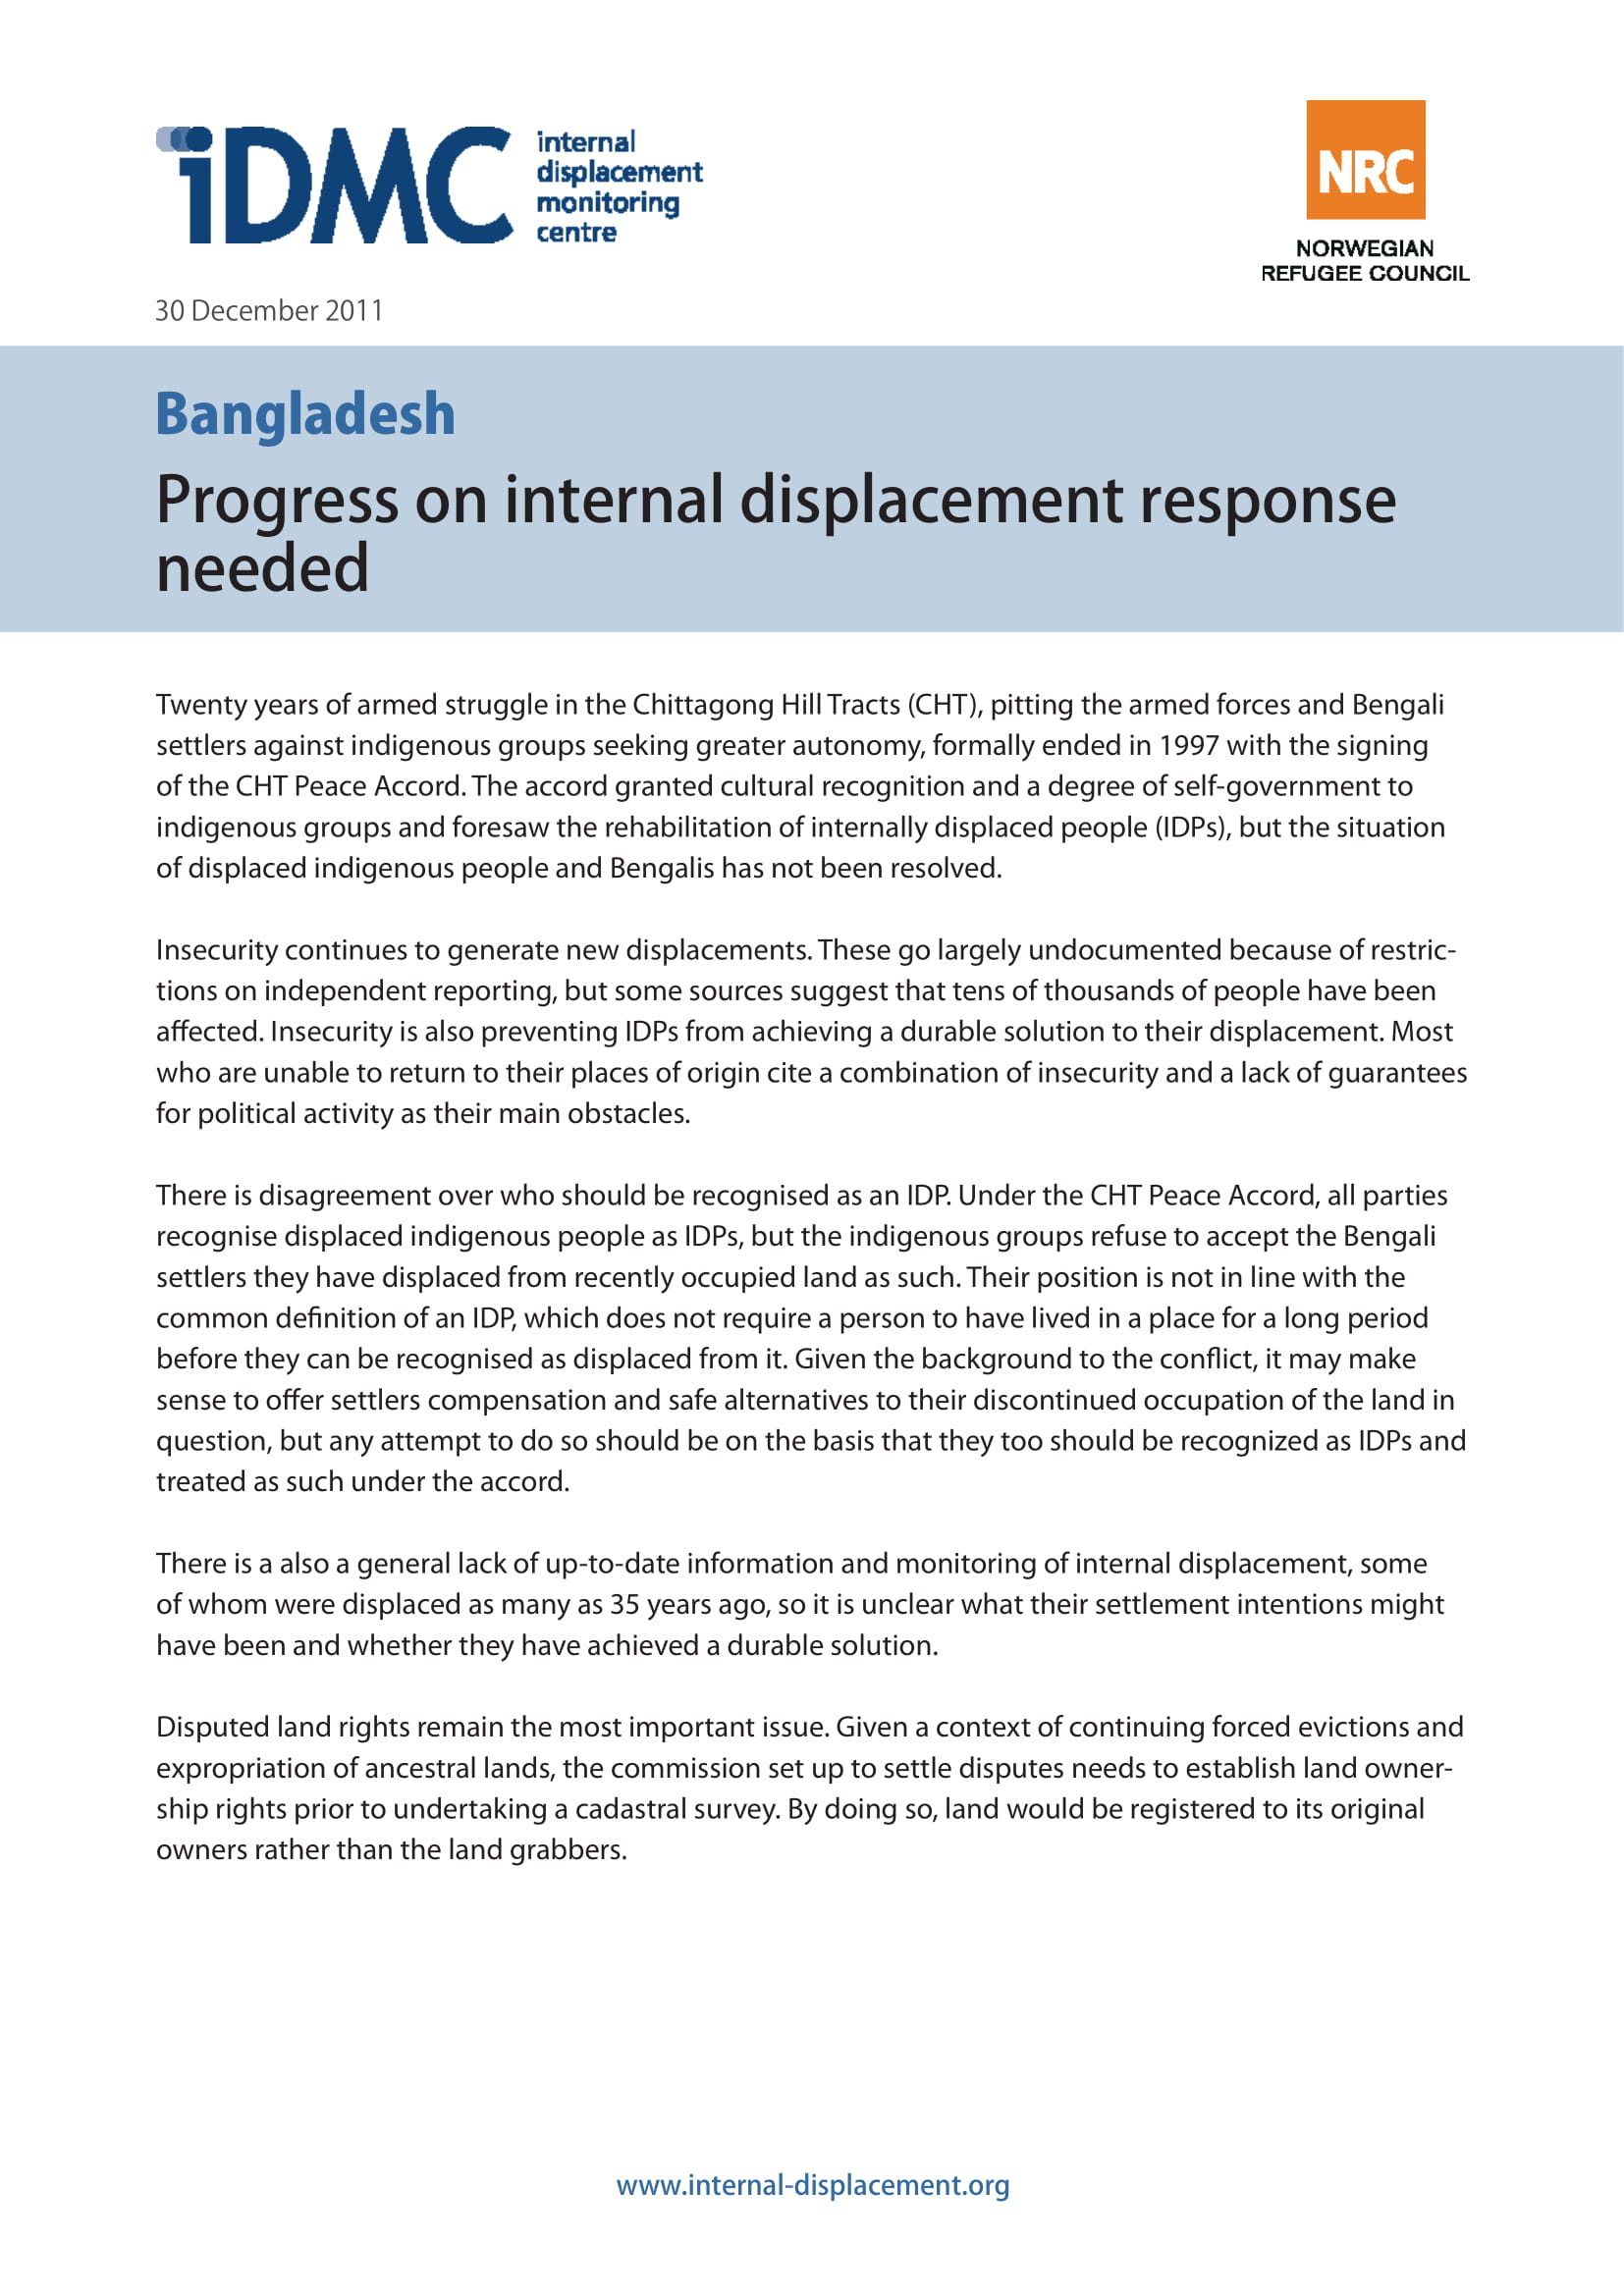 Bangladesh: Progress on internal displacement response needed